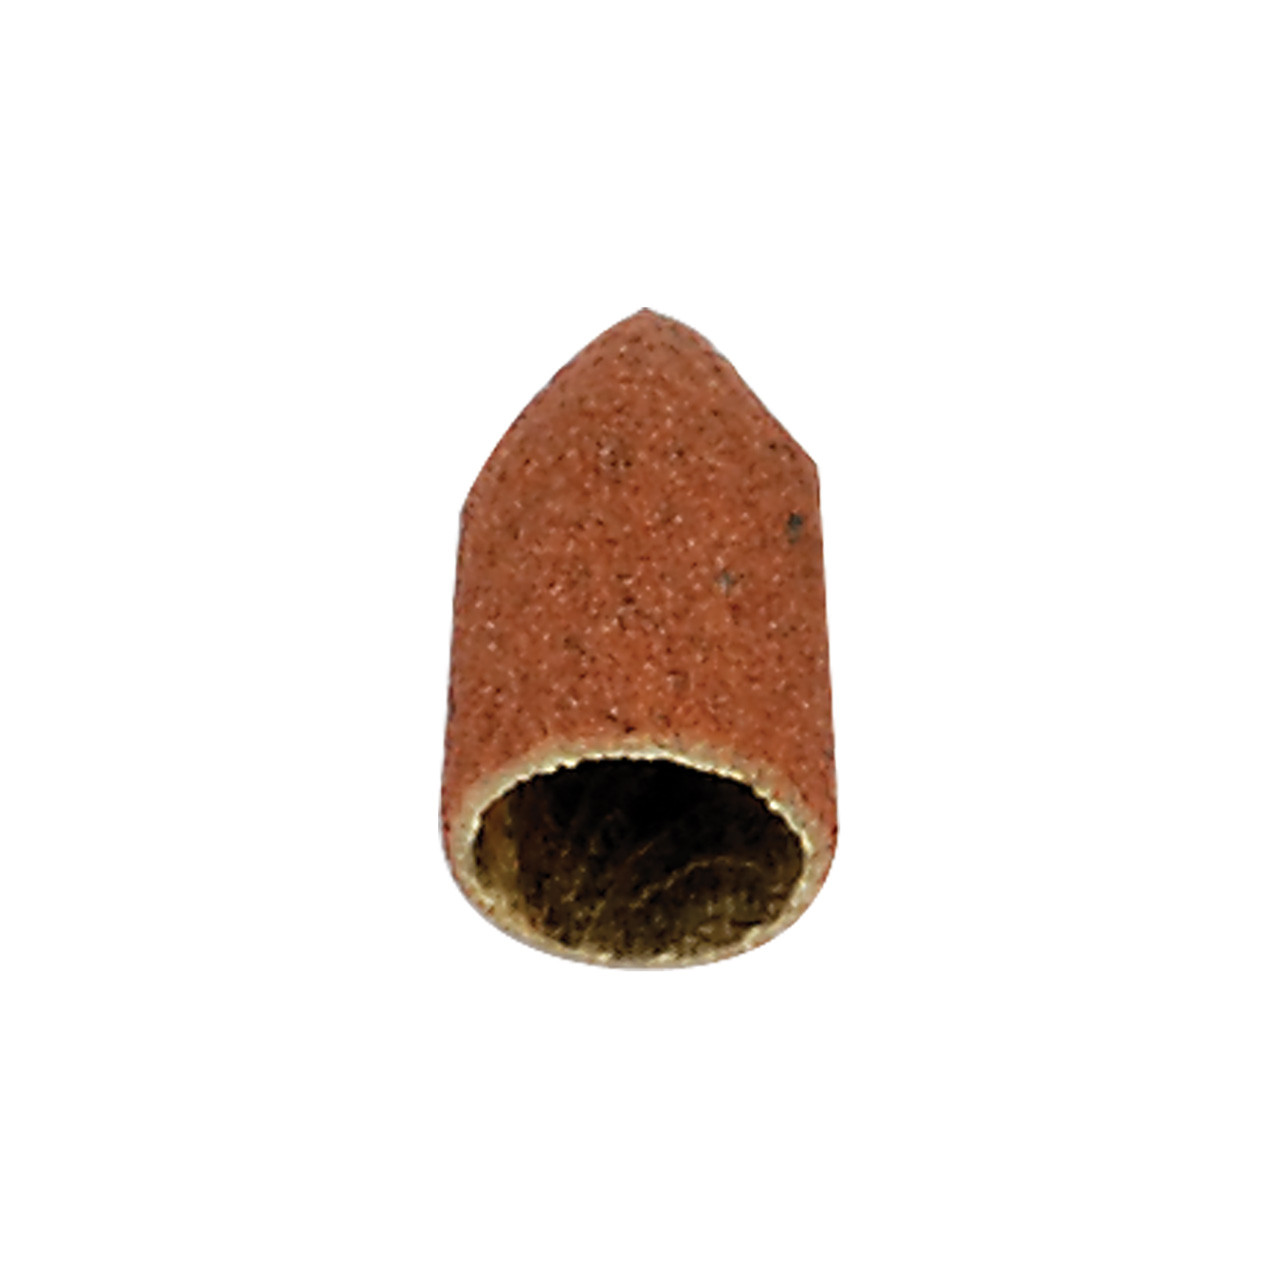 Abrasive Caps - Cone Top 1/2" x 1-1/16", 280 Grit